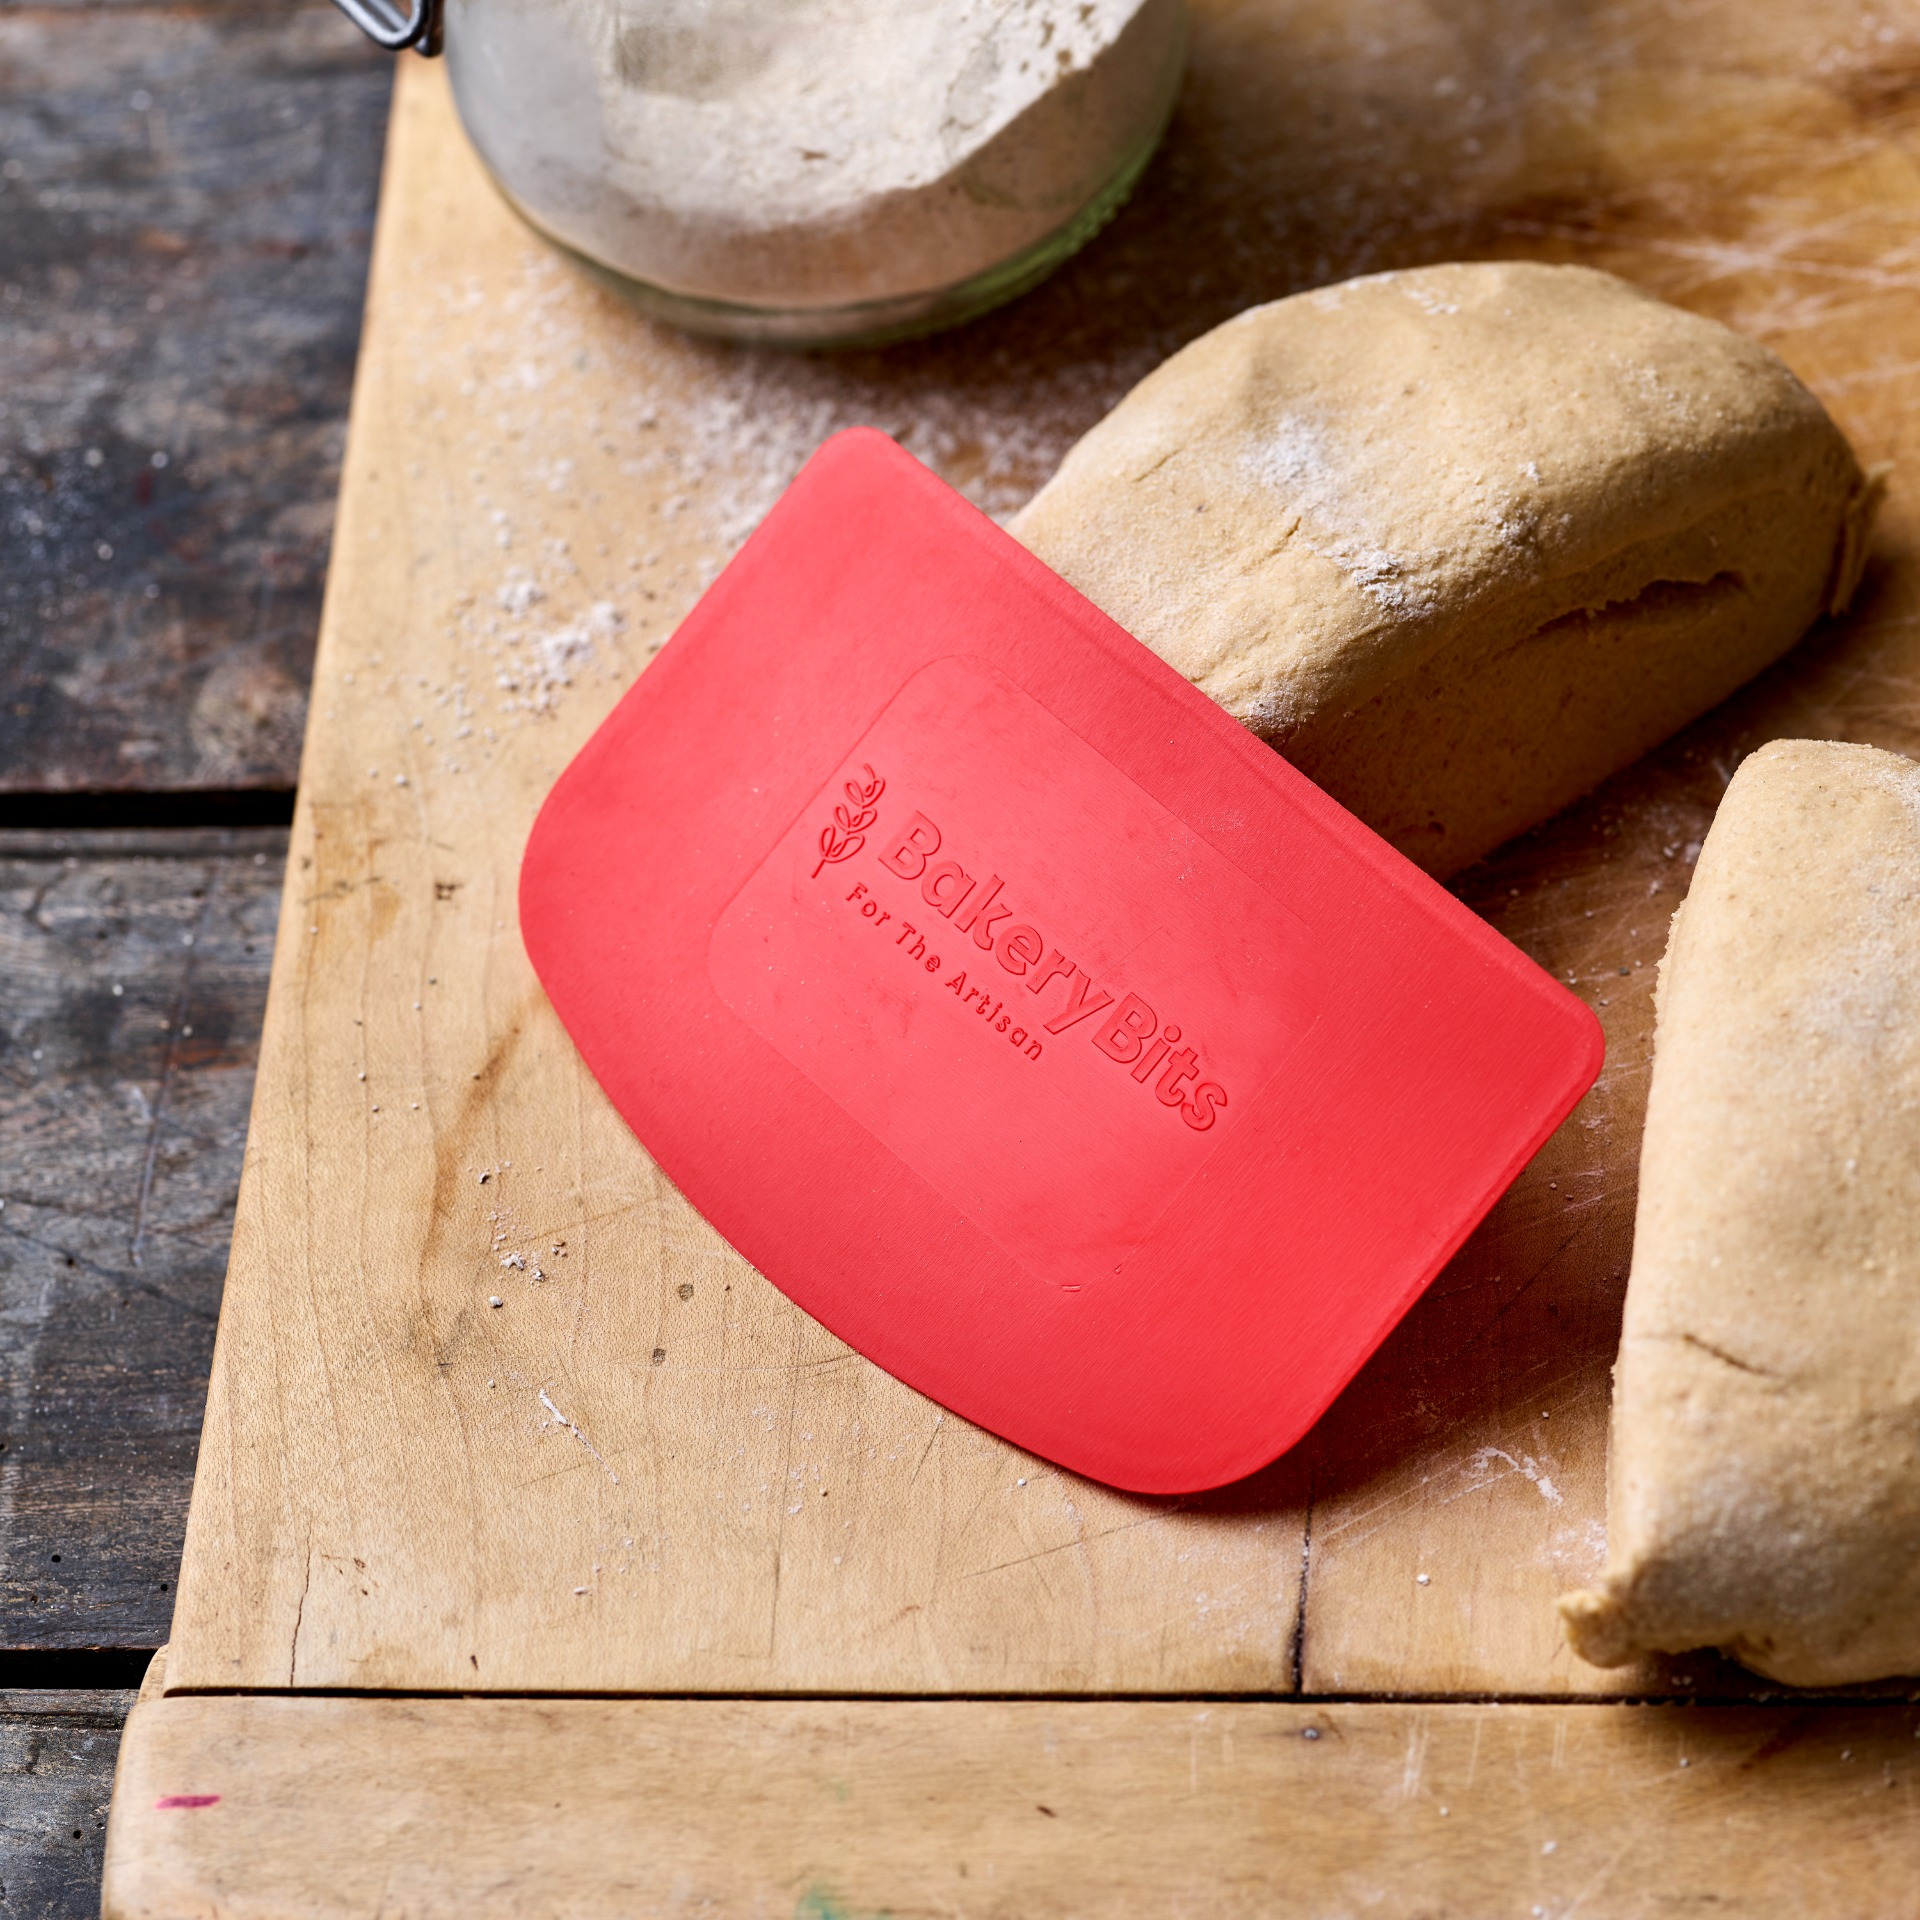 BakeryBits Flexible Dough Scraper (Red)